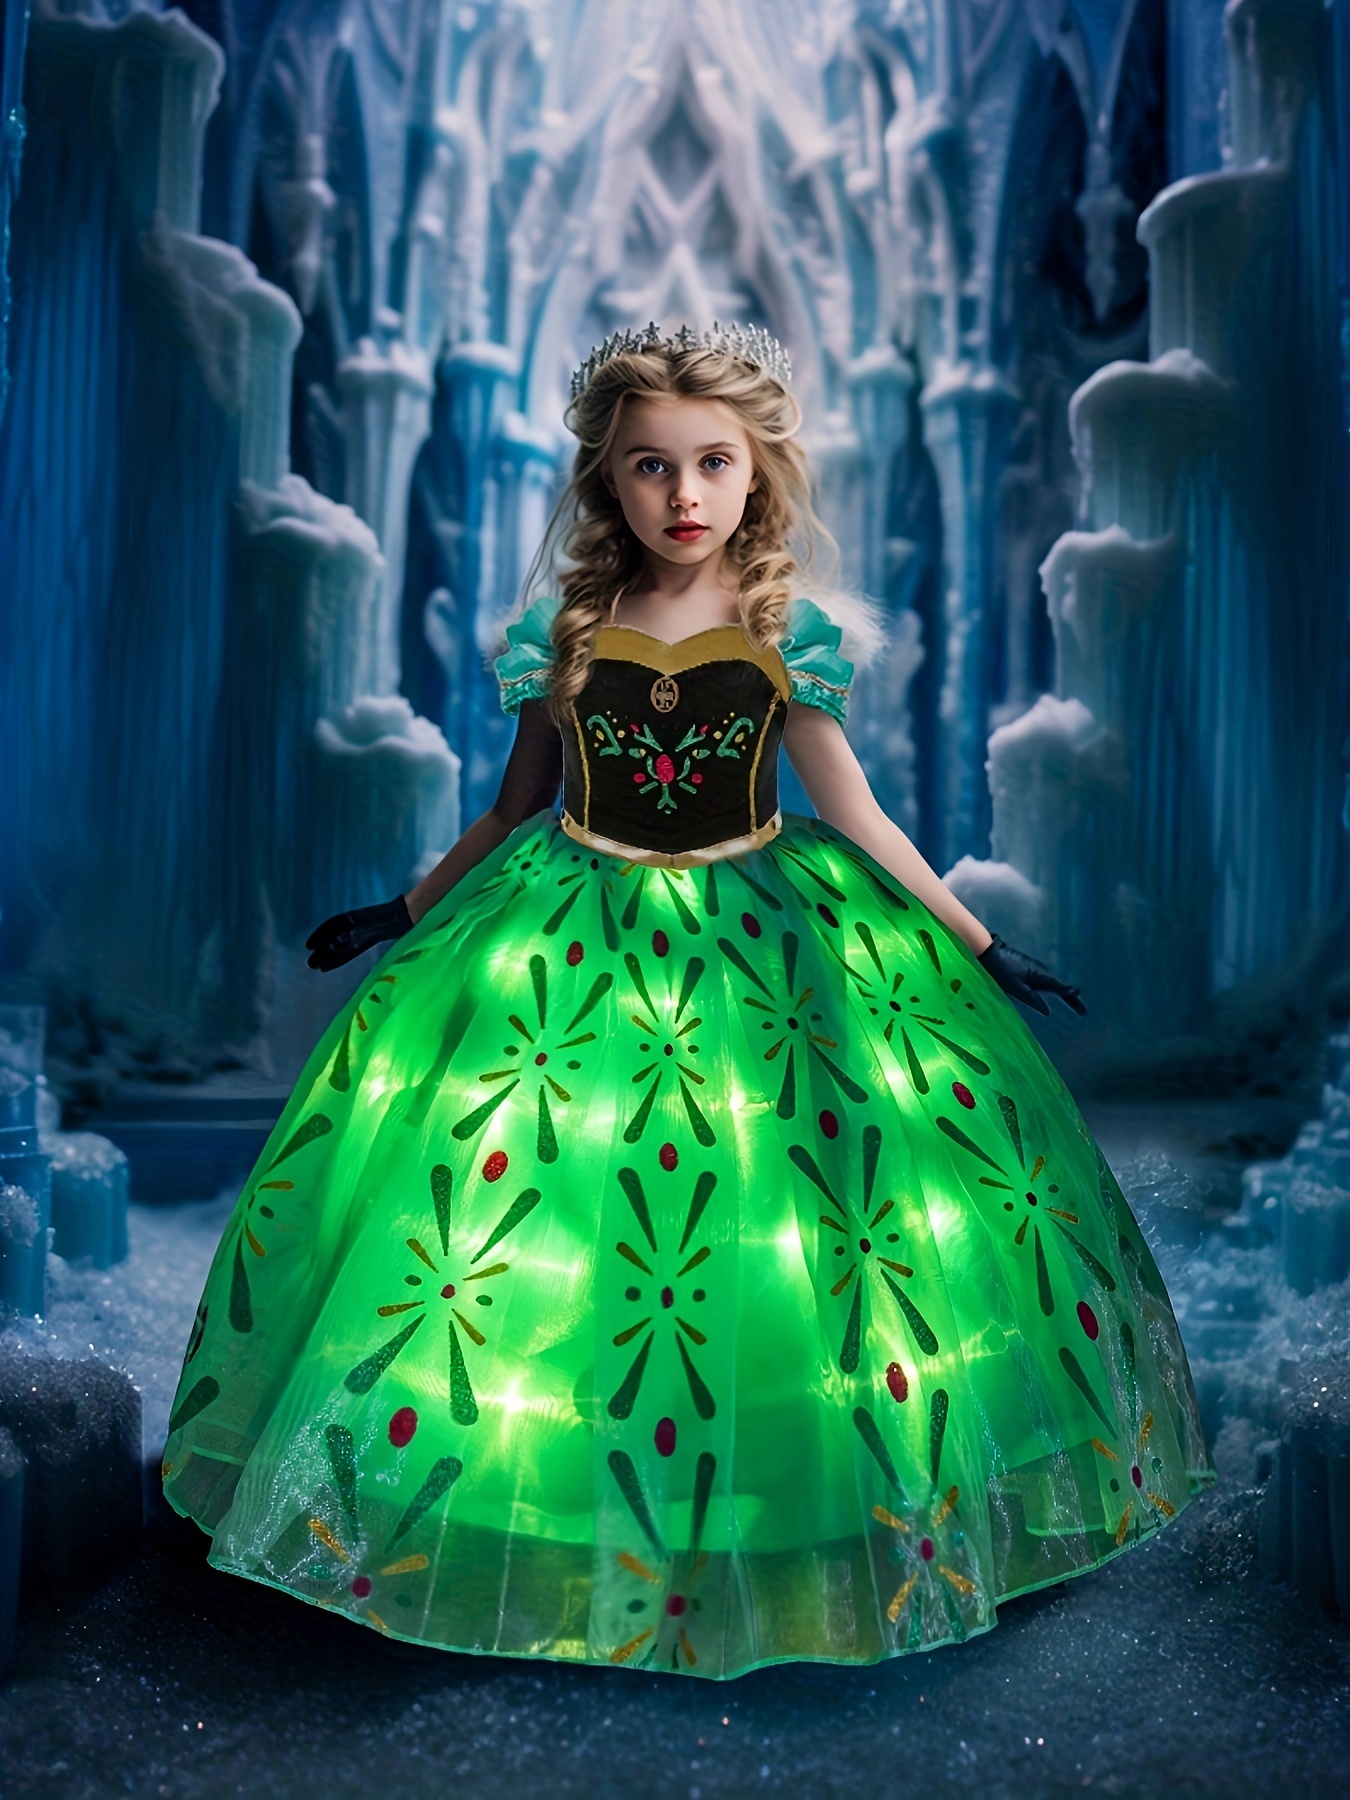 Menina pequena sereia princesa fantasia fantasiar-se traje